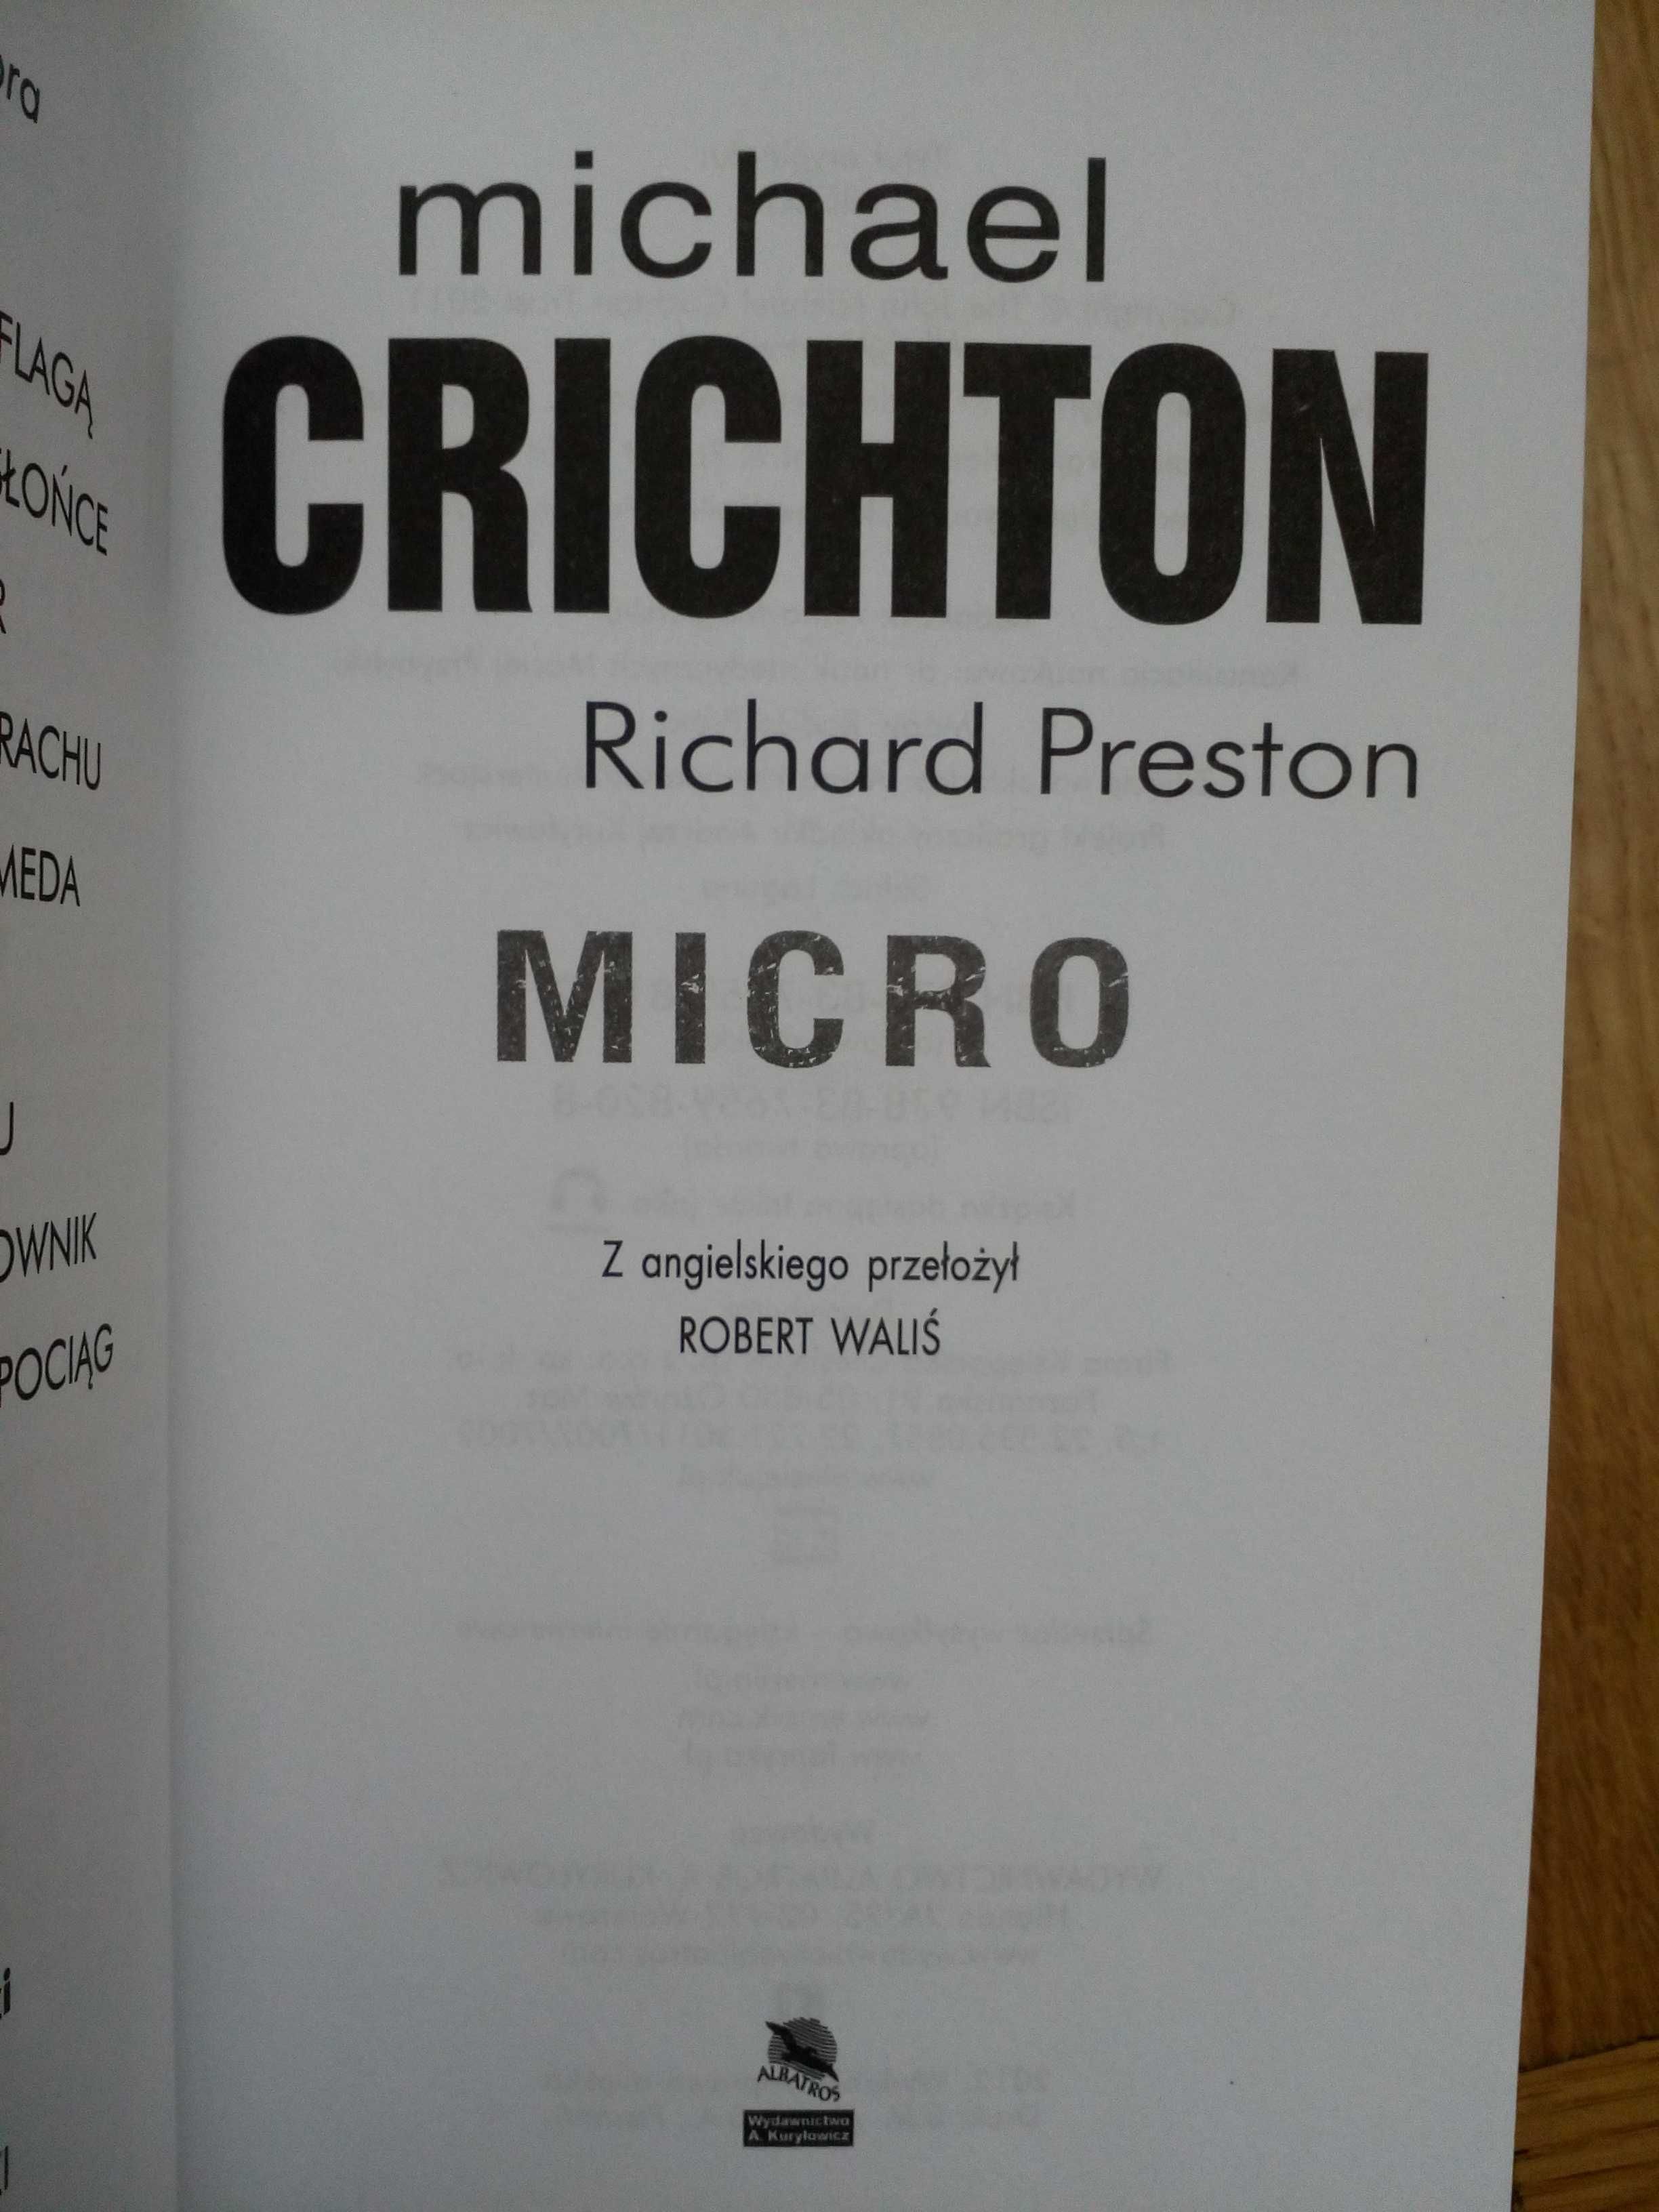 Michael Crichton – Micro - thriller s-f, jak NOWA